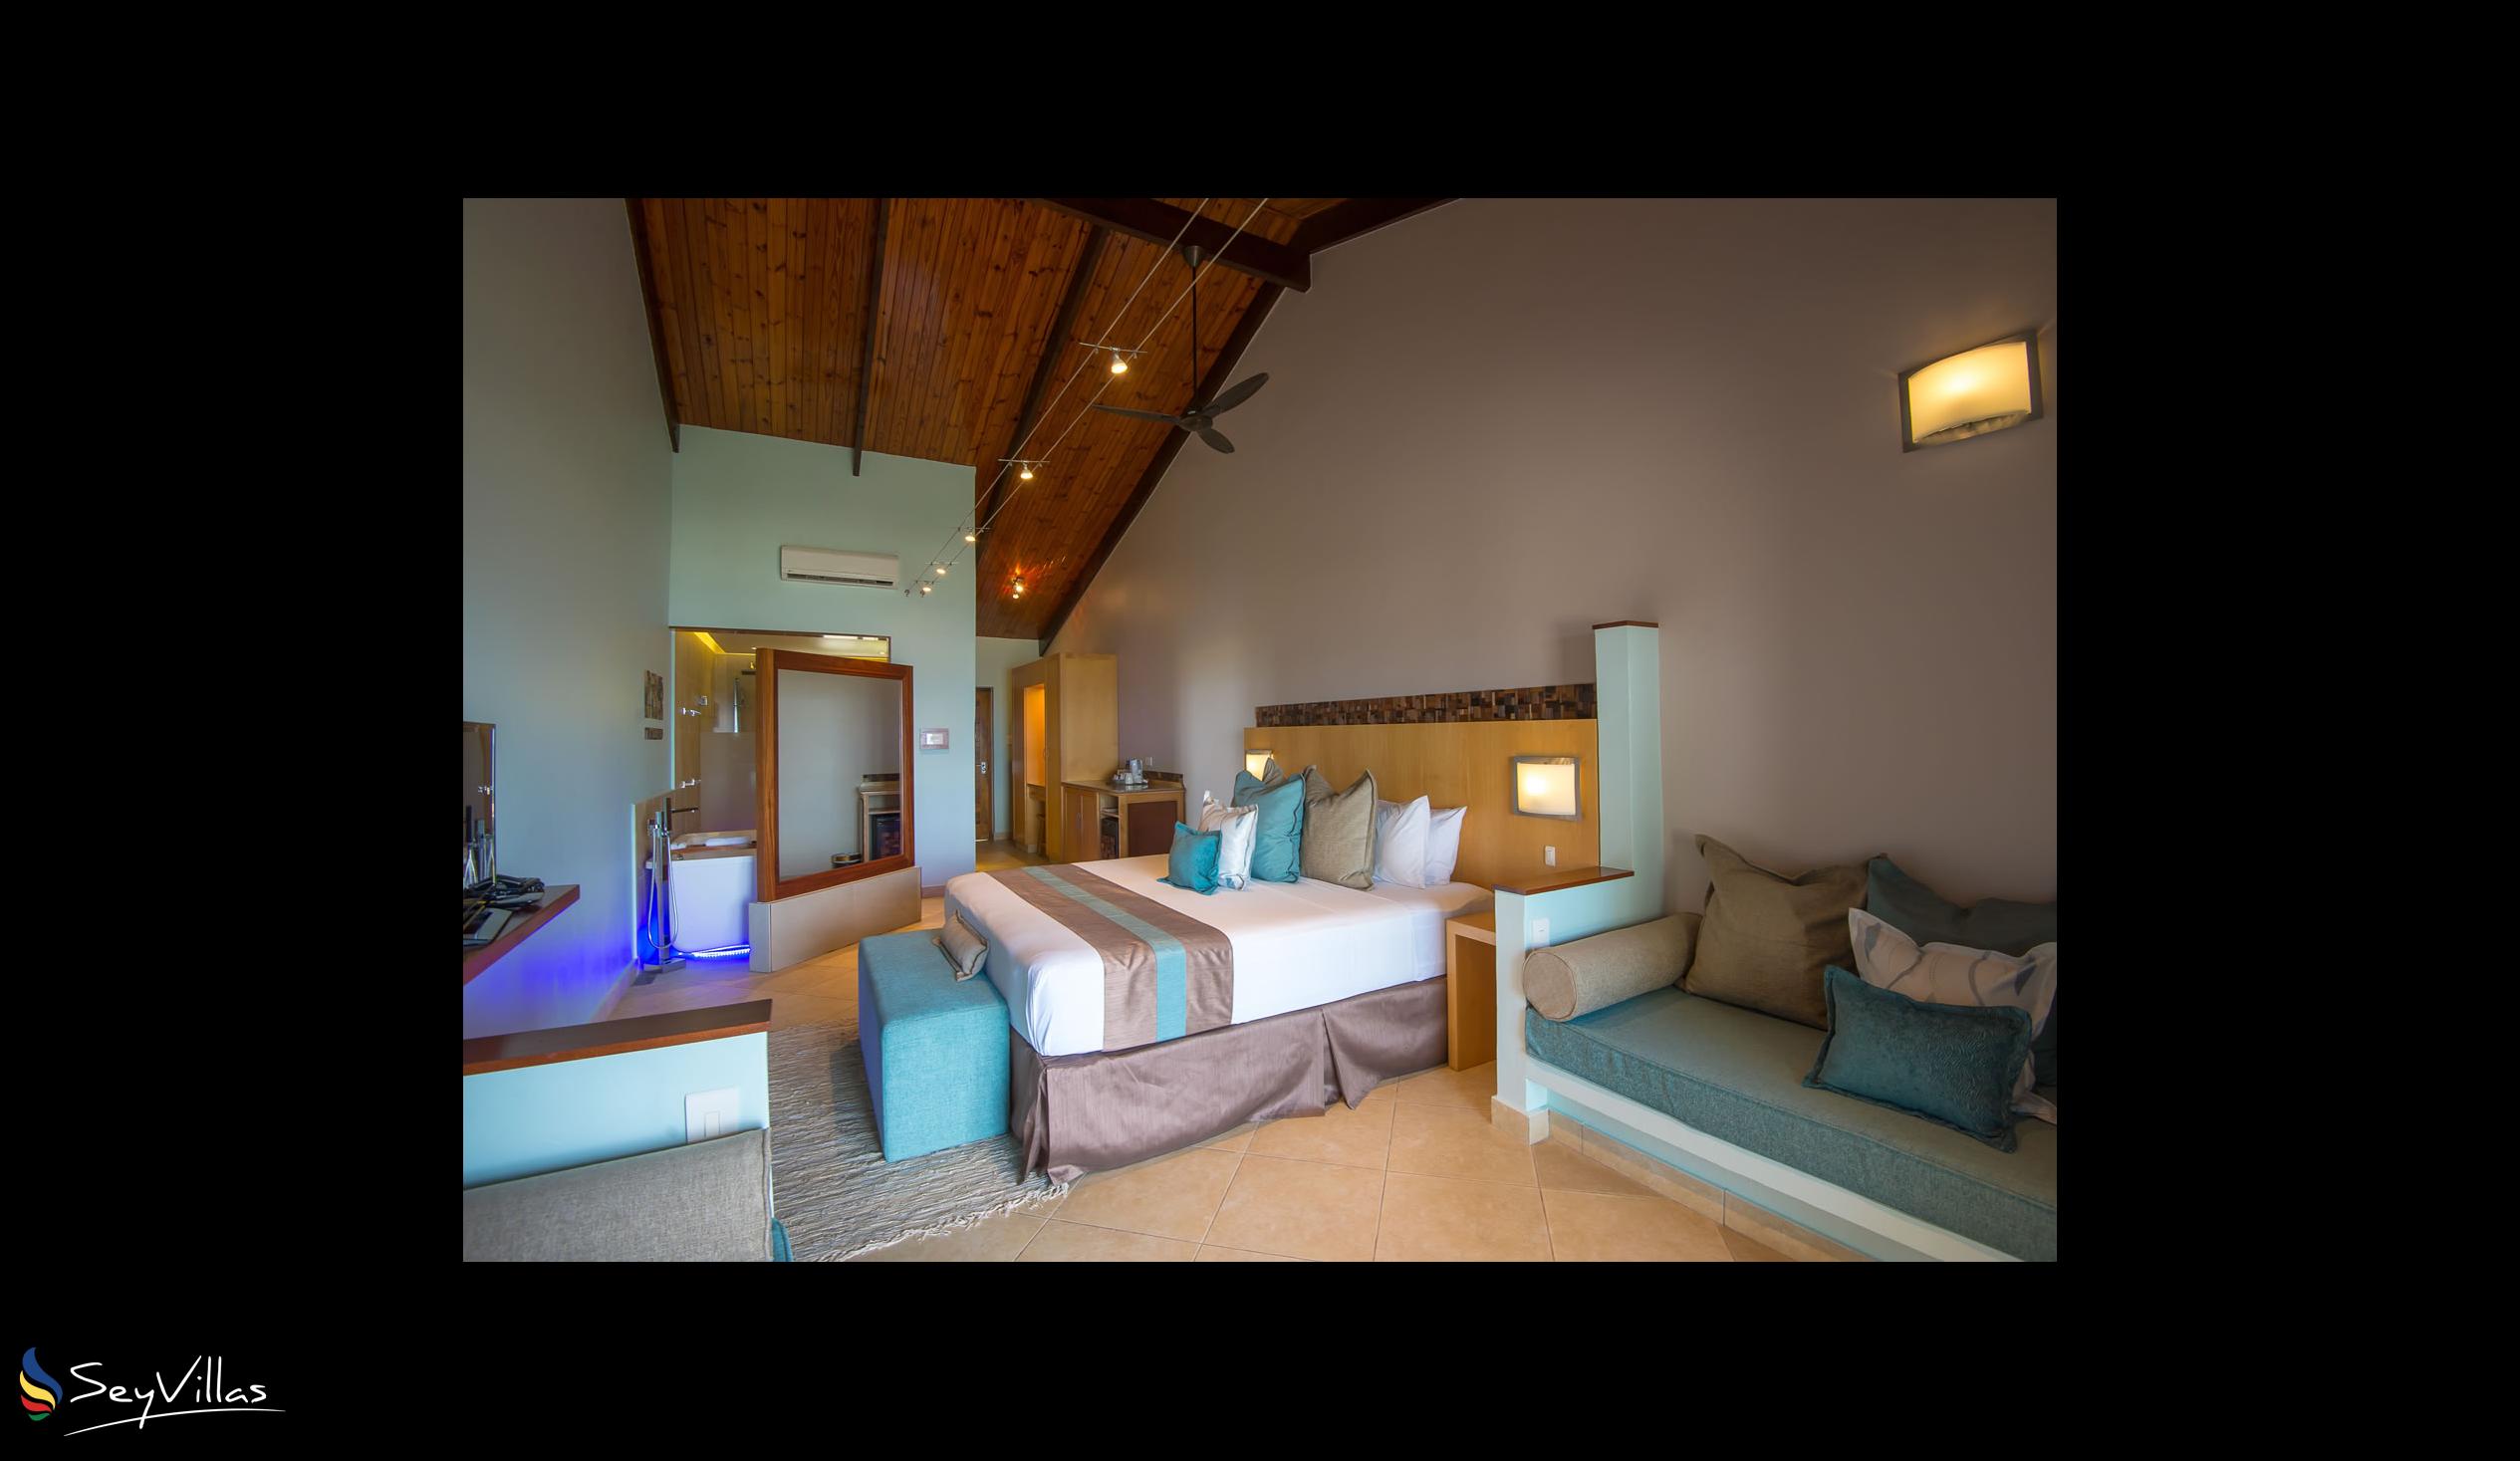 Photo 62: Coco de Mer & Black Parrot Suites - Superior - Praslin (Seychelles)